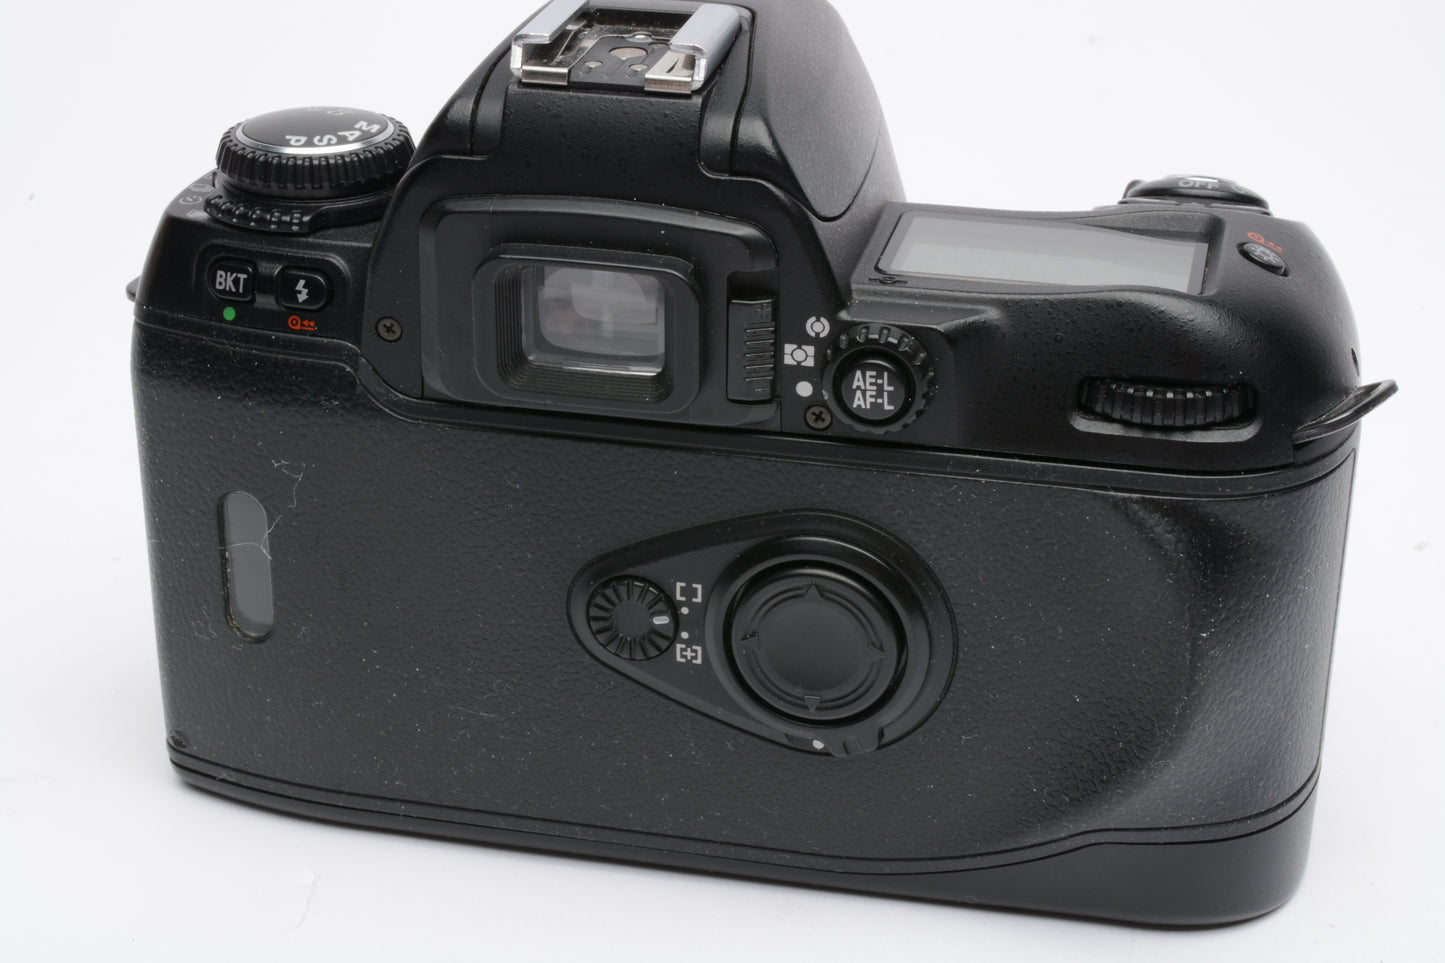 Nikon N80 35mm SLR body, cap, strap, tested, works great